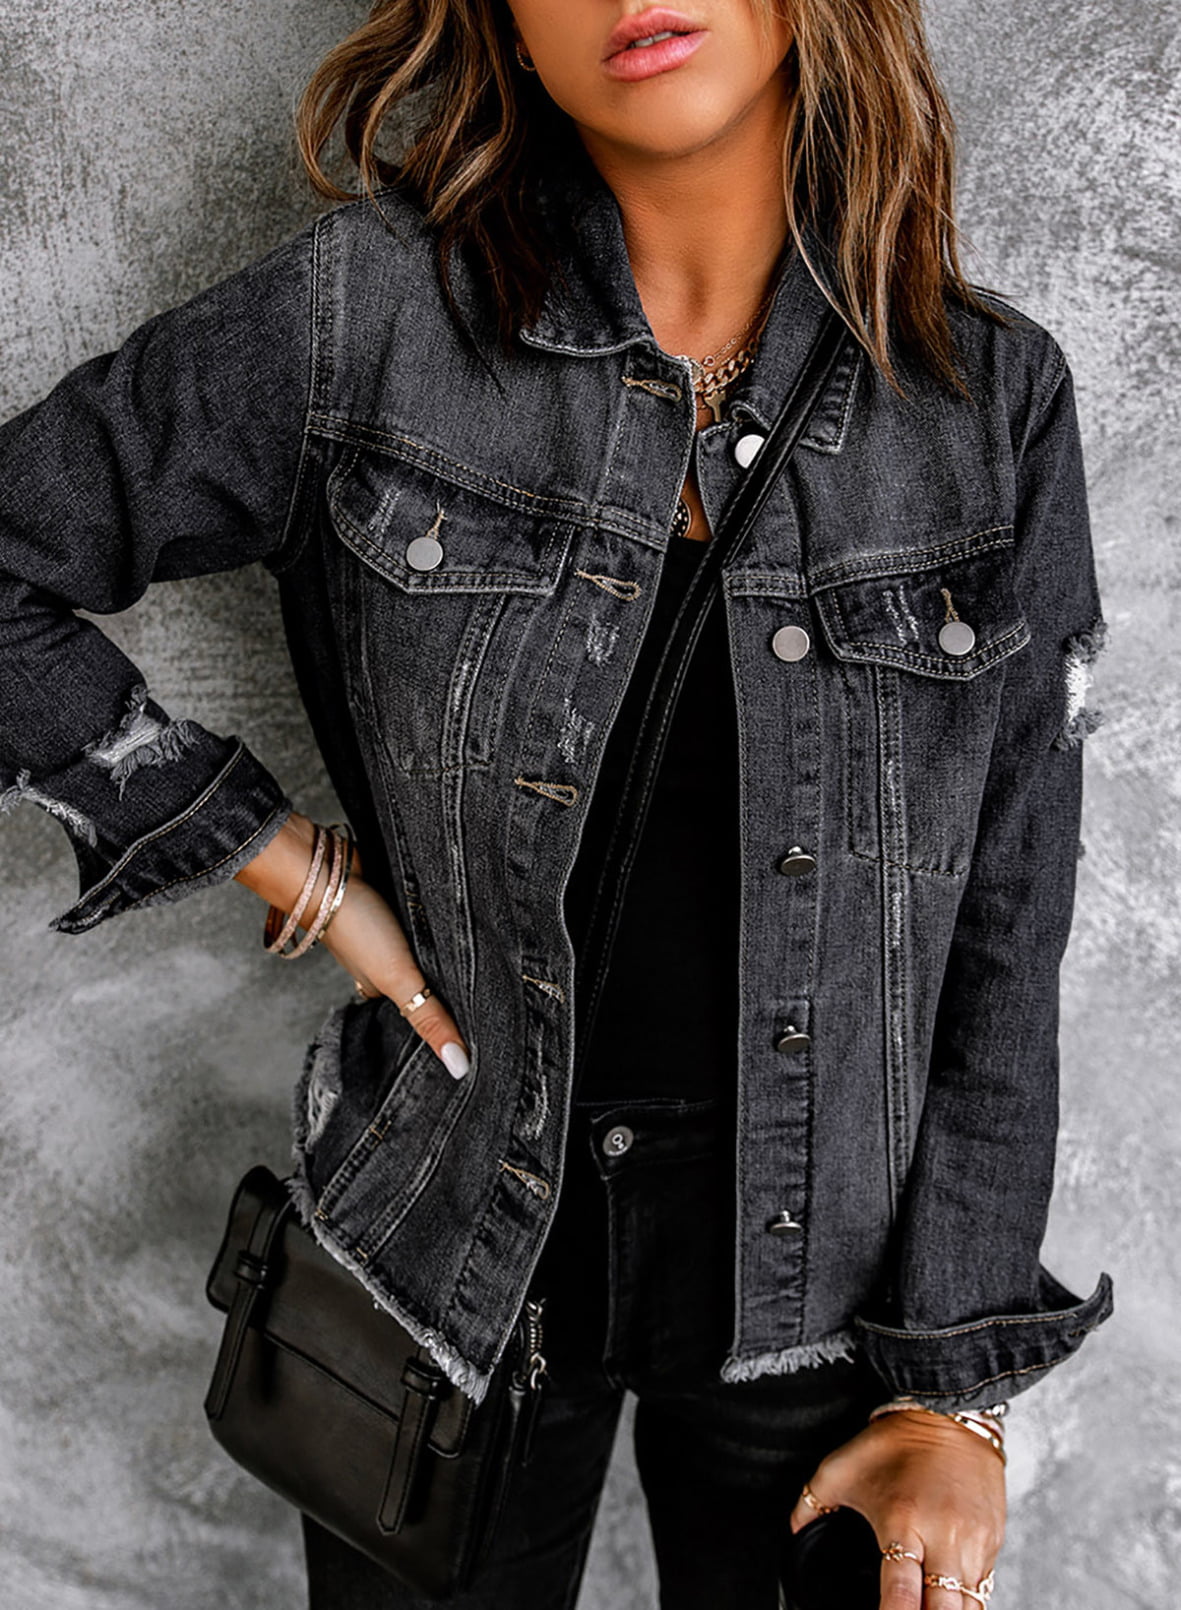 Belliskey Full Sleeve Solid Women Denim Jacket - Buy Belliskey Full Sleeve  Solid Women Denim Jacket Online at Best Prices in India | Flipkart.com